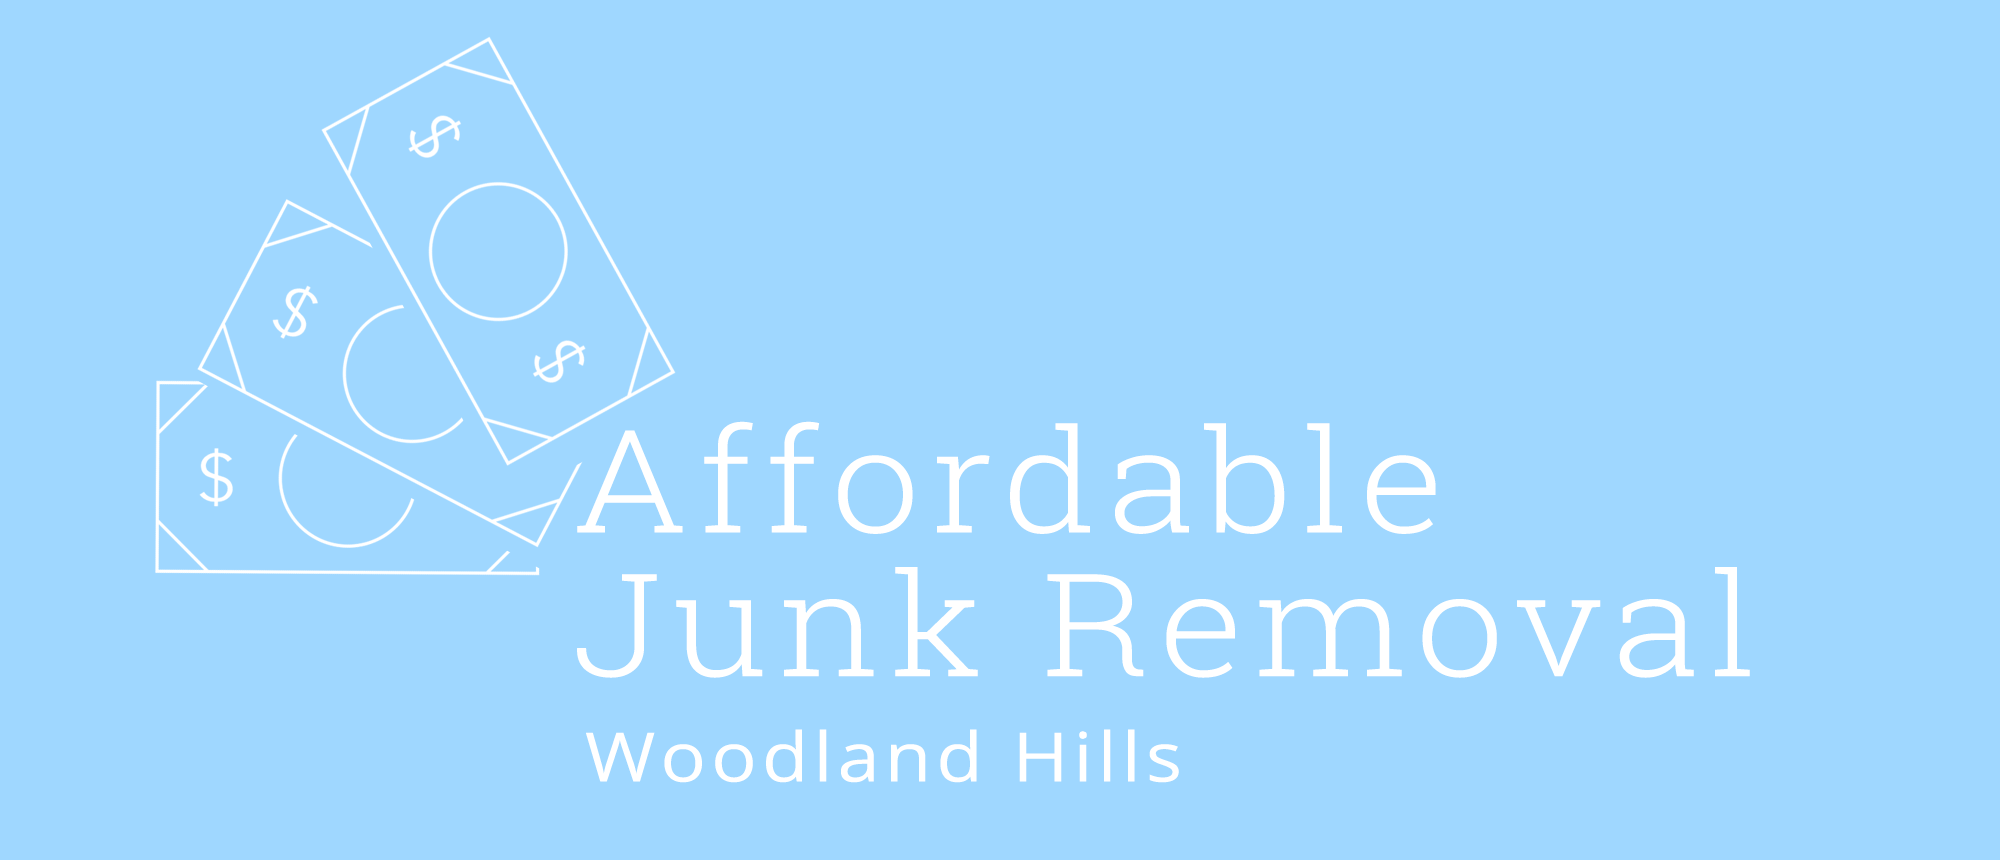 junk removal woodland hills